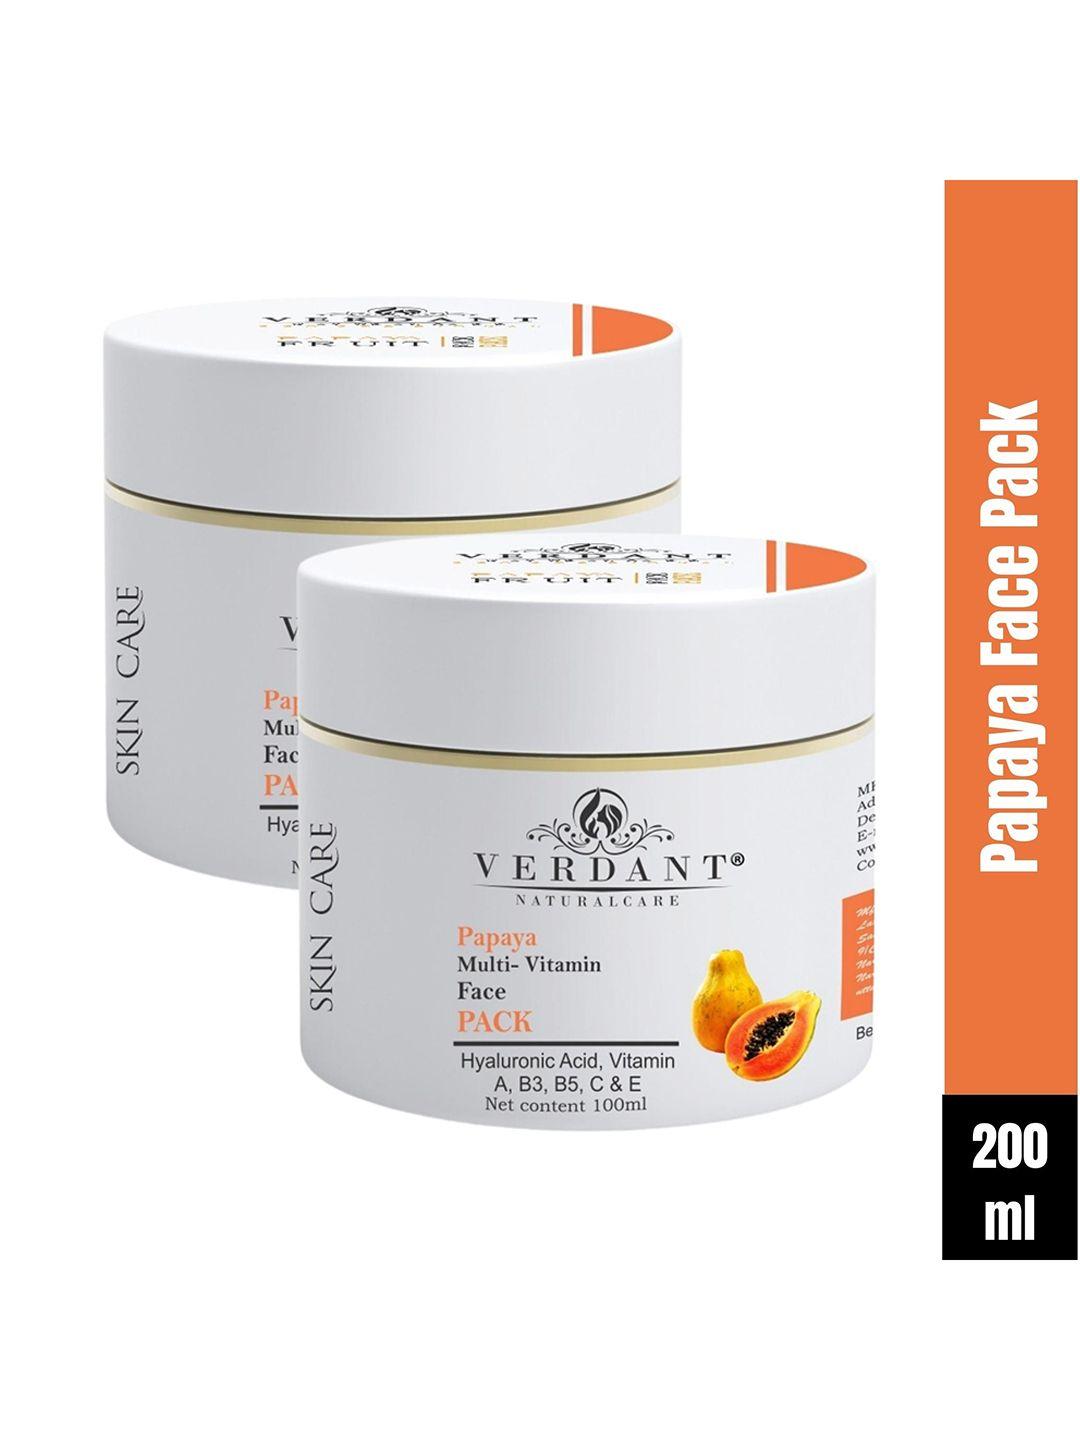 verdant natural care set of 2 papaya multi-vitamin face pack with vitamin a - 100 ml each